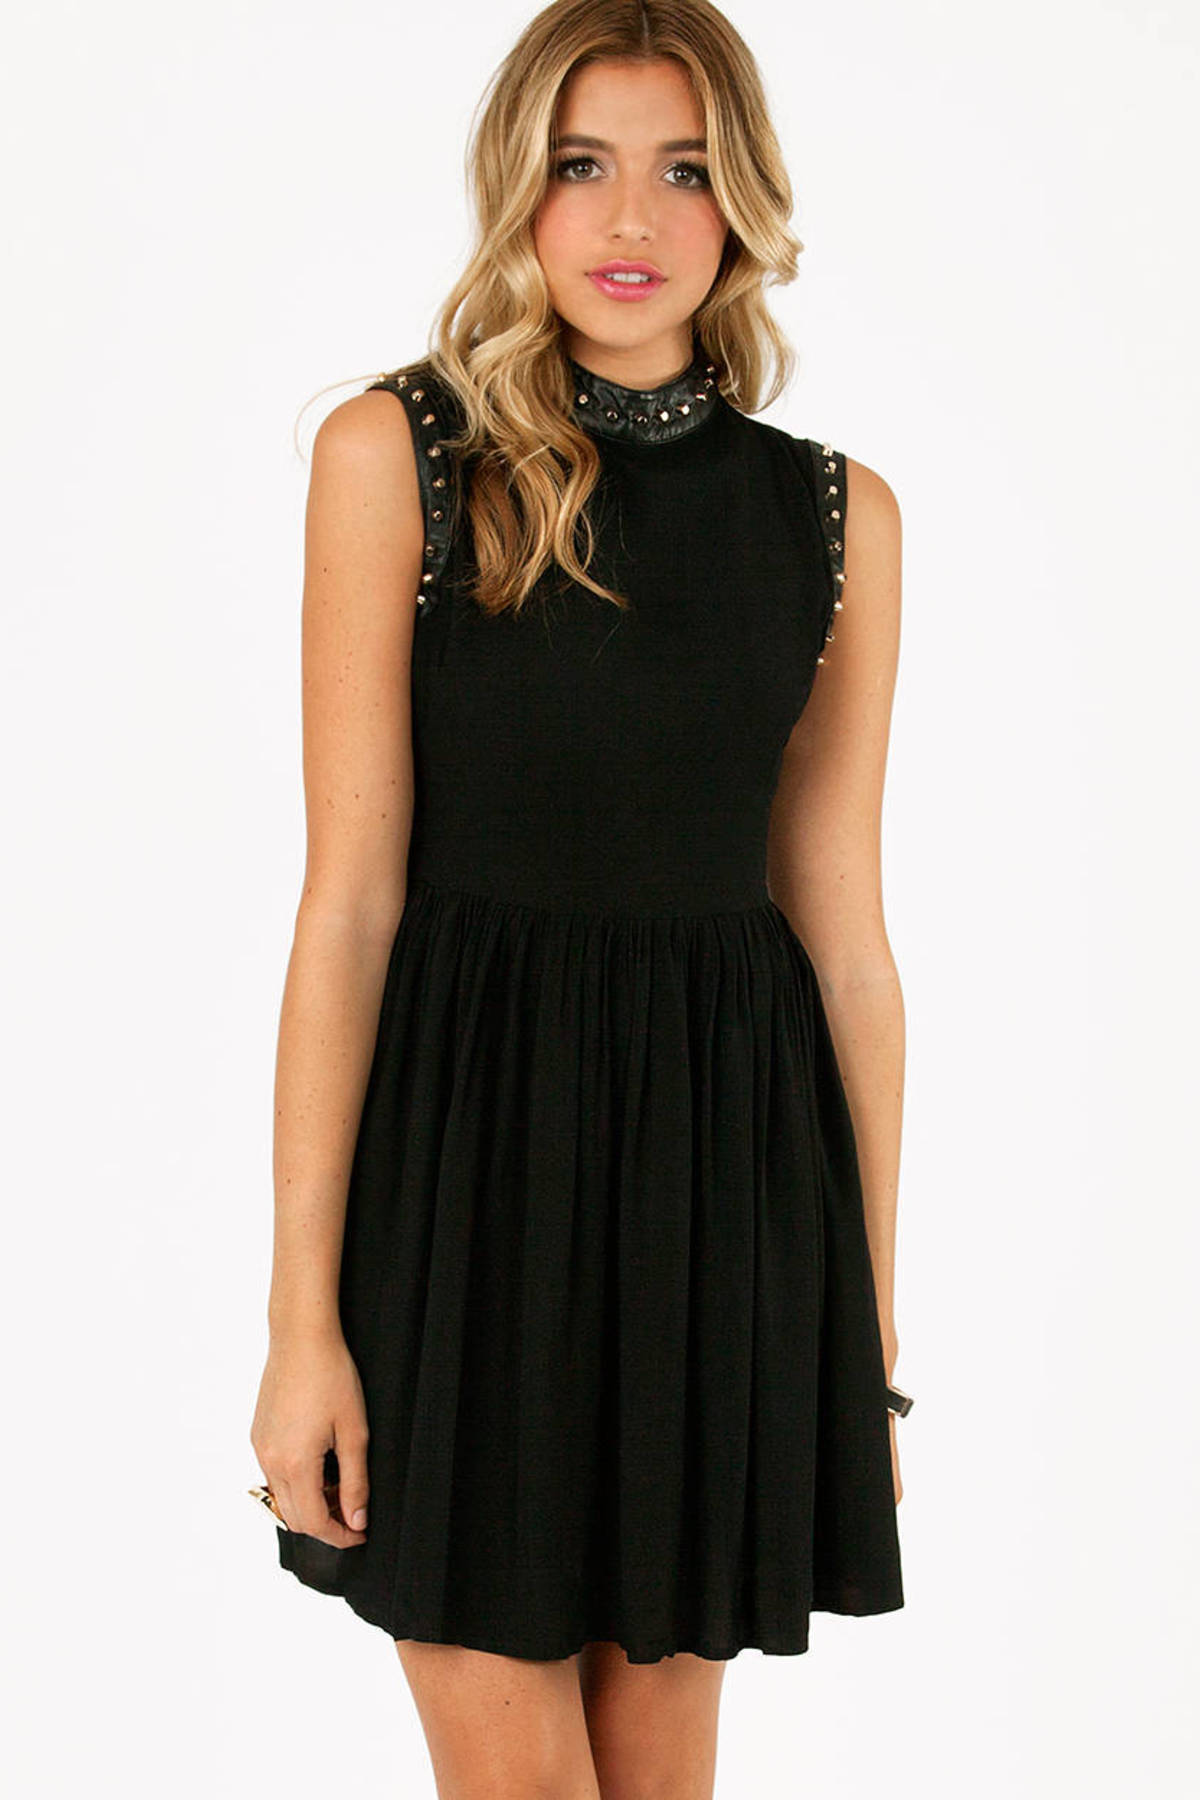 Brandi Sleeveless Studded Dress in Black - $19 | Tobi US